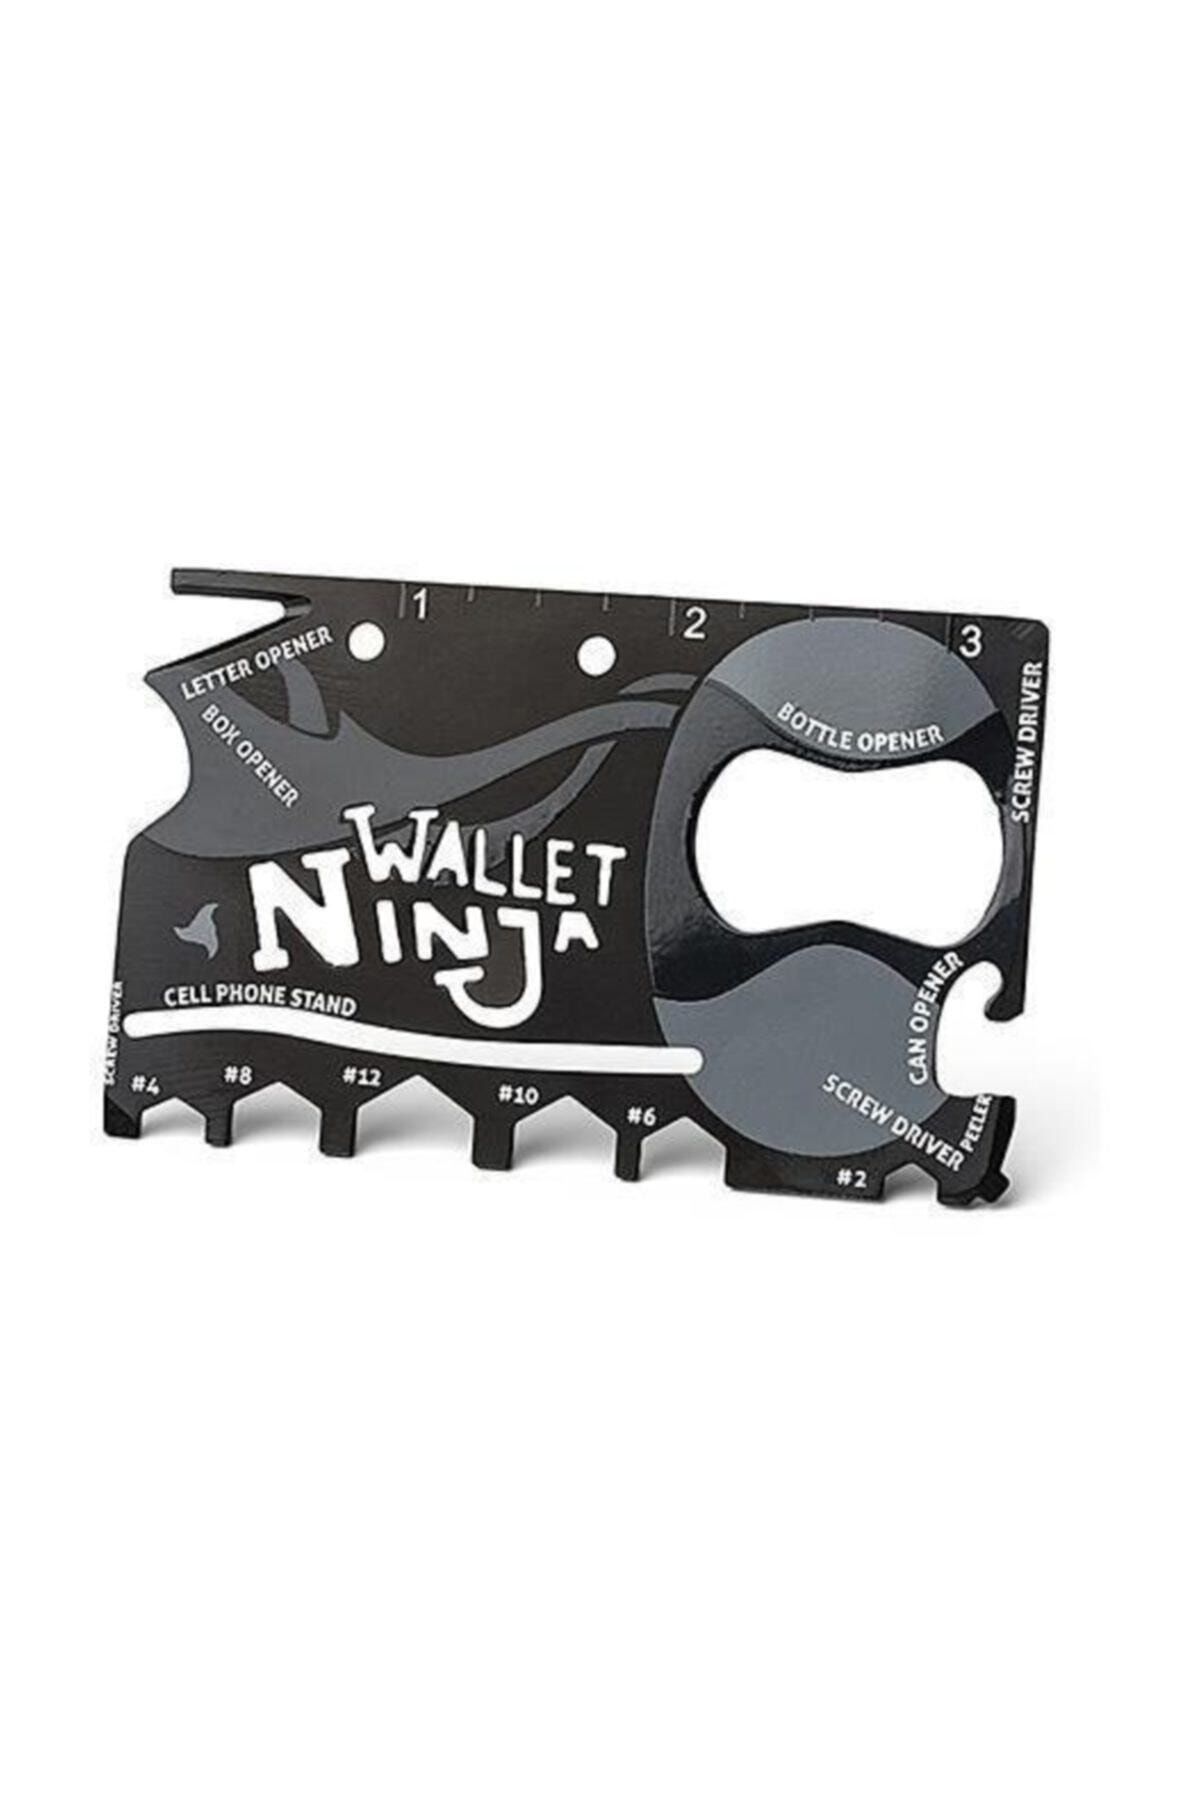 Modauyum Acil Durum Kiti Ninja Wallet 18 In 1 Multi Tool Kit